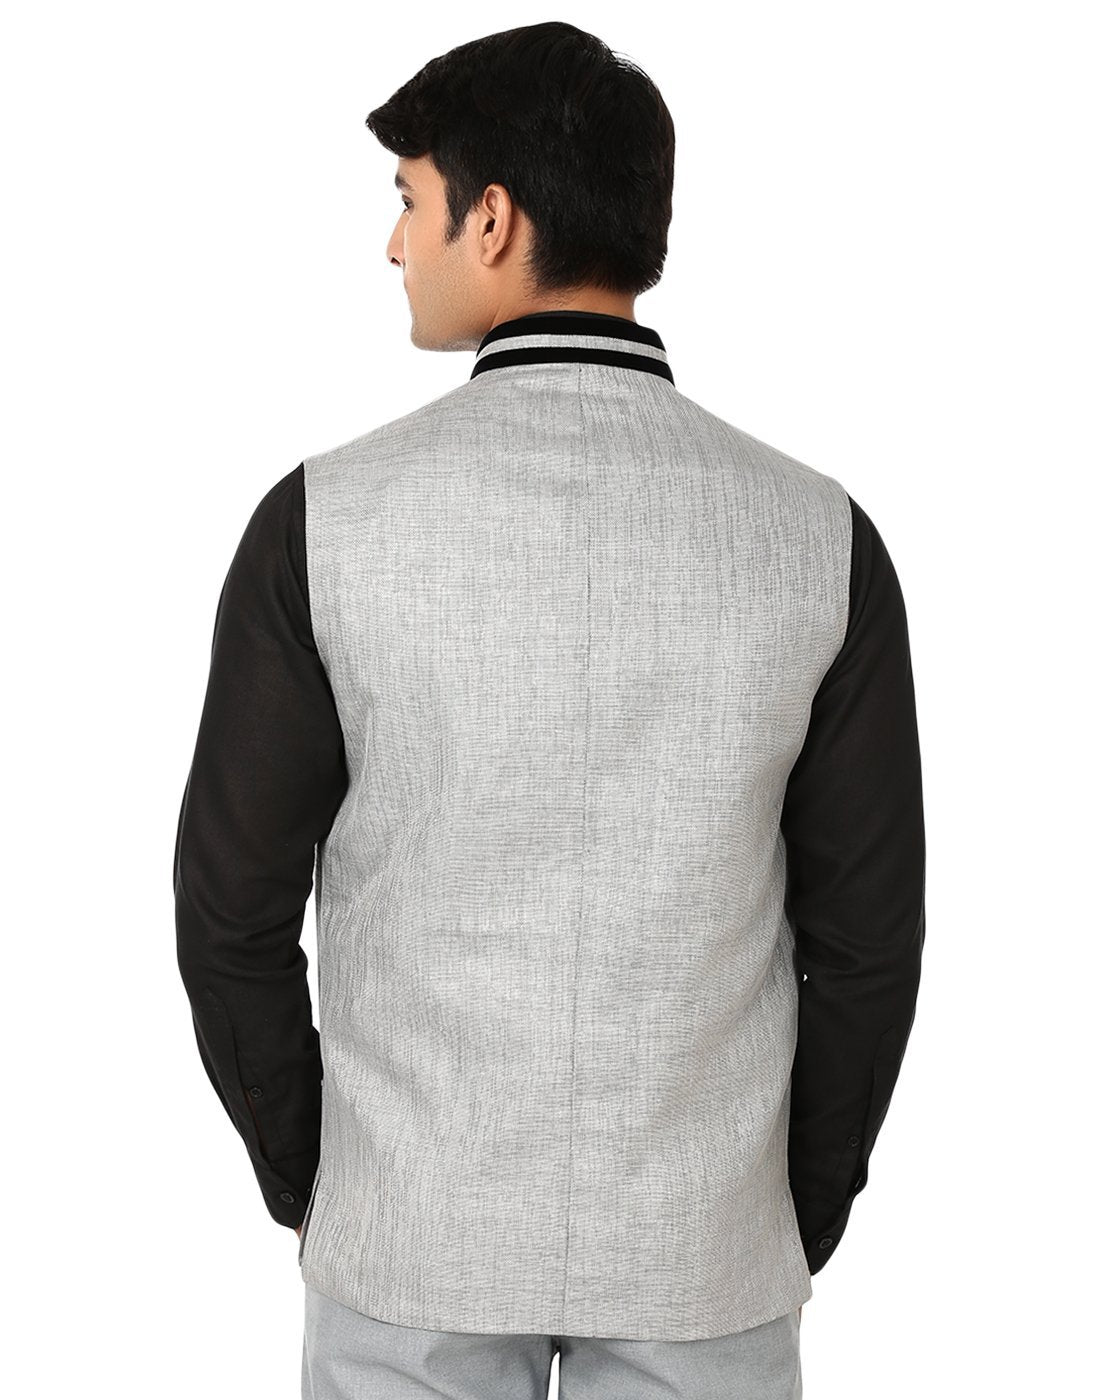 Rayon Cotton Silver Nehru Jacket